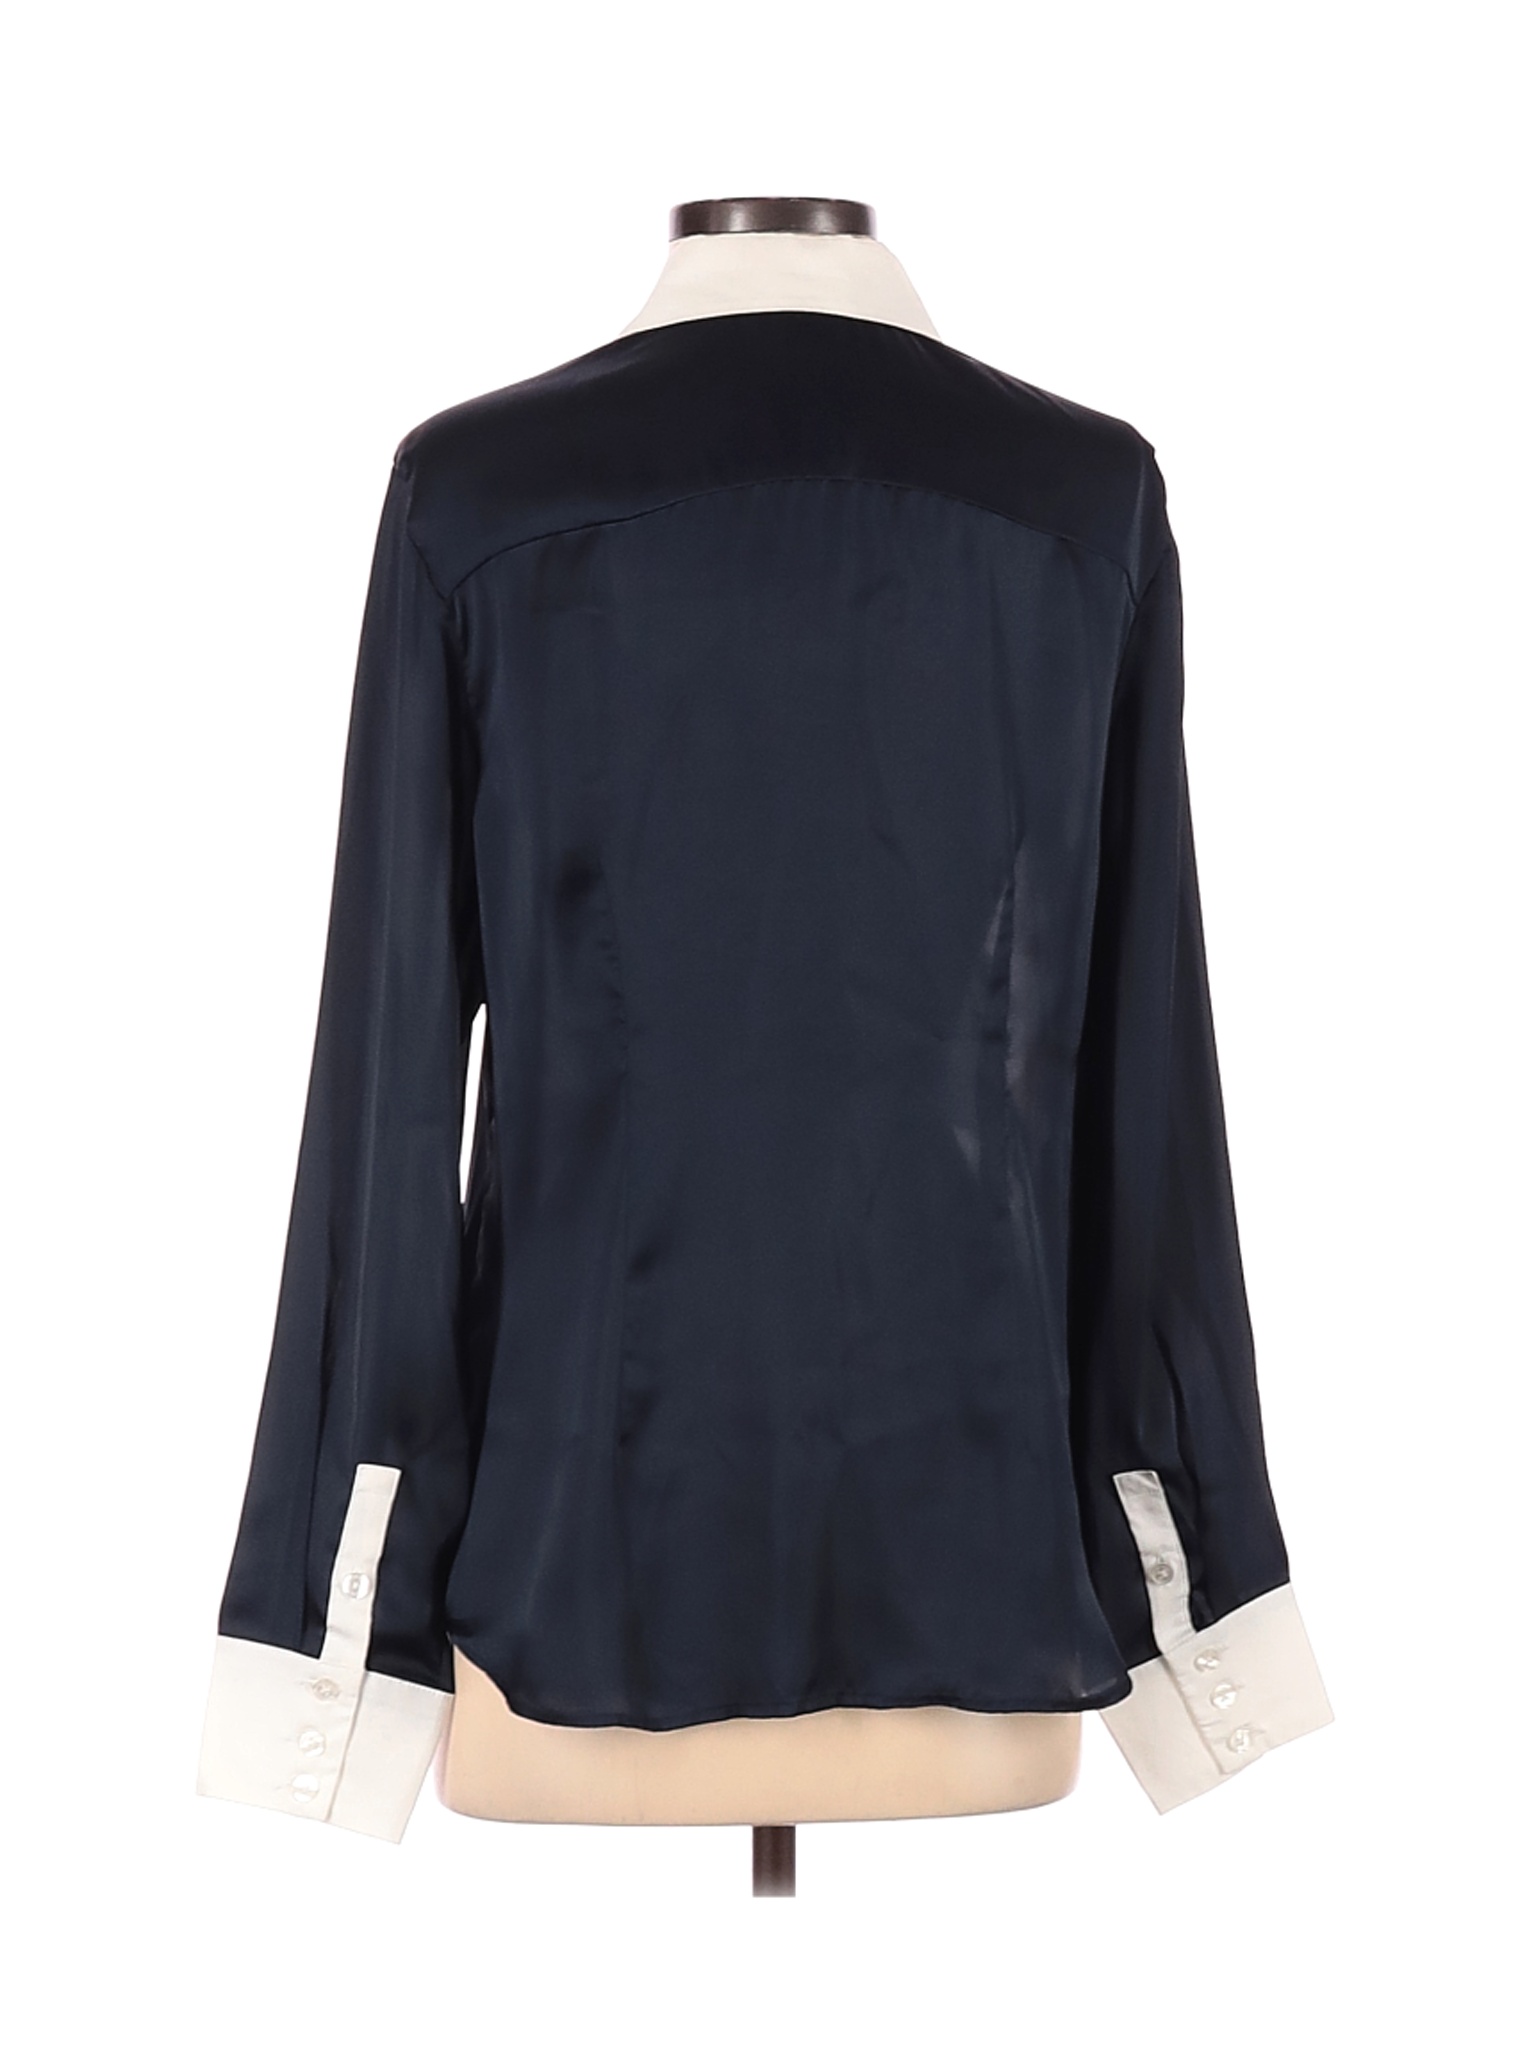 Altuzarra for Target Women Black Long Sleeve Blouse M | eBay